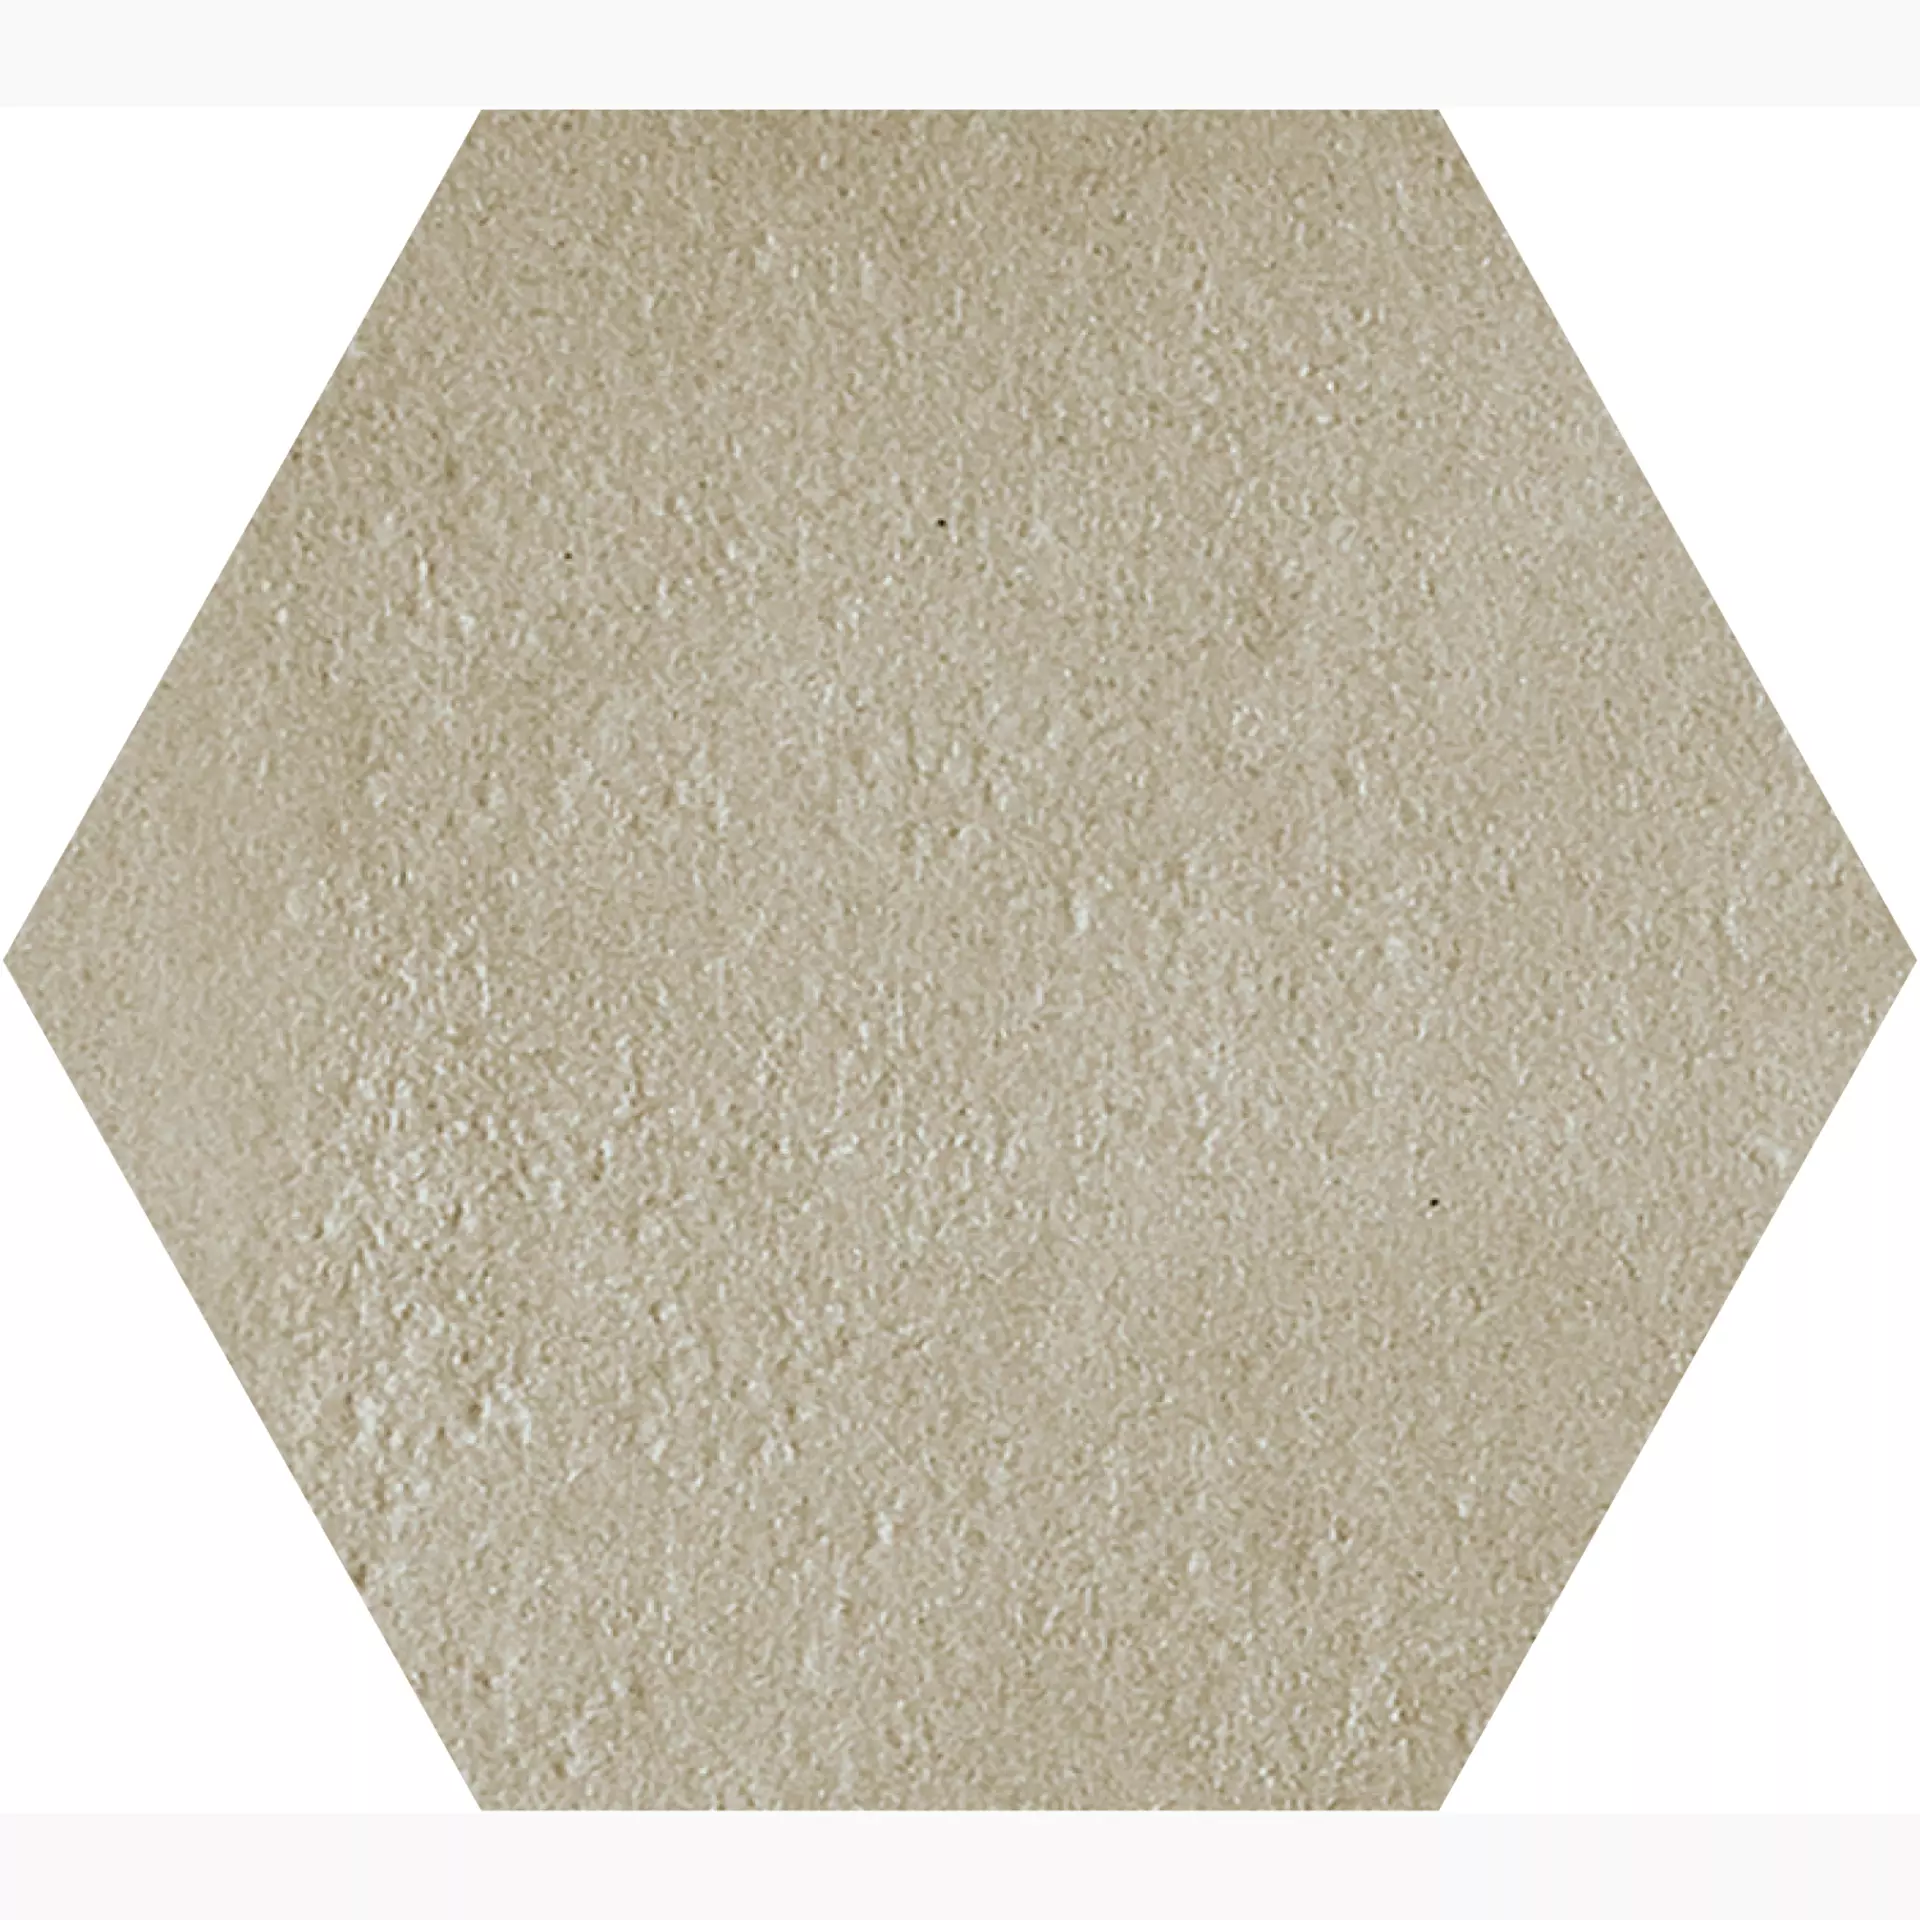 Gigacer Concrete Rope Matt Small Hexagon PO9ESAROPE 16x18cm 4,8mm